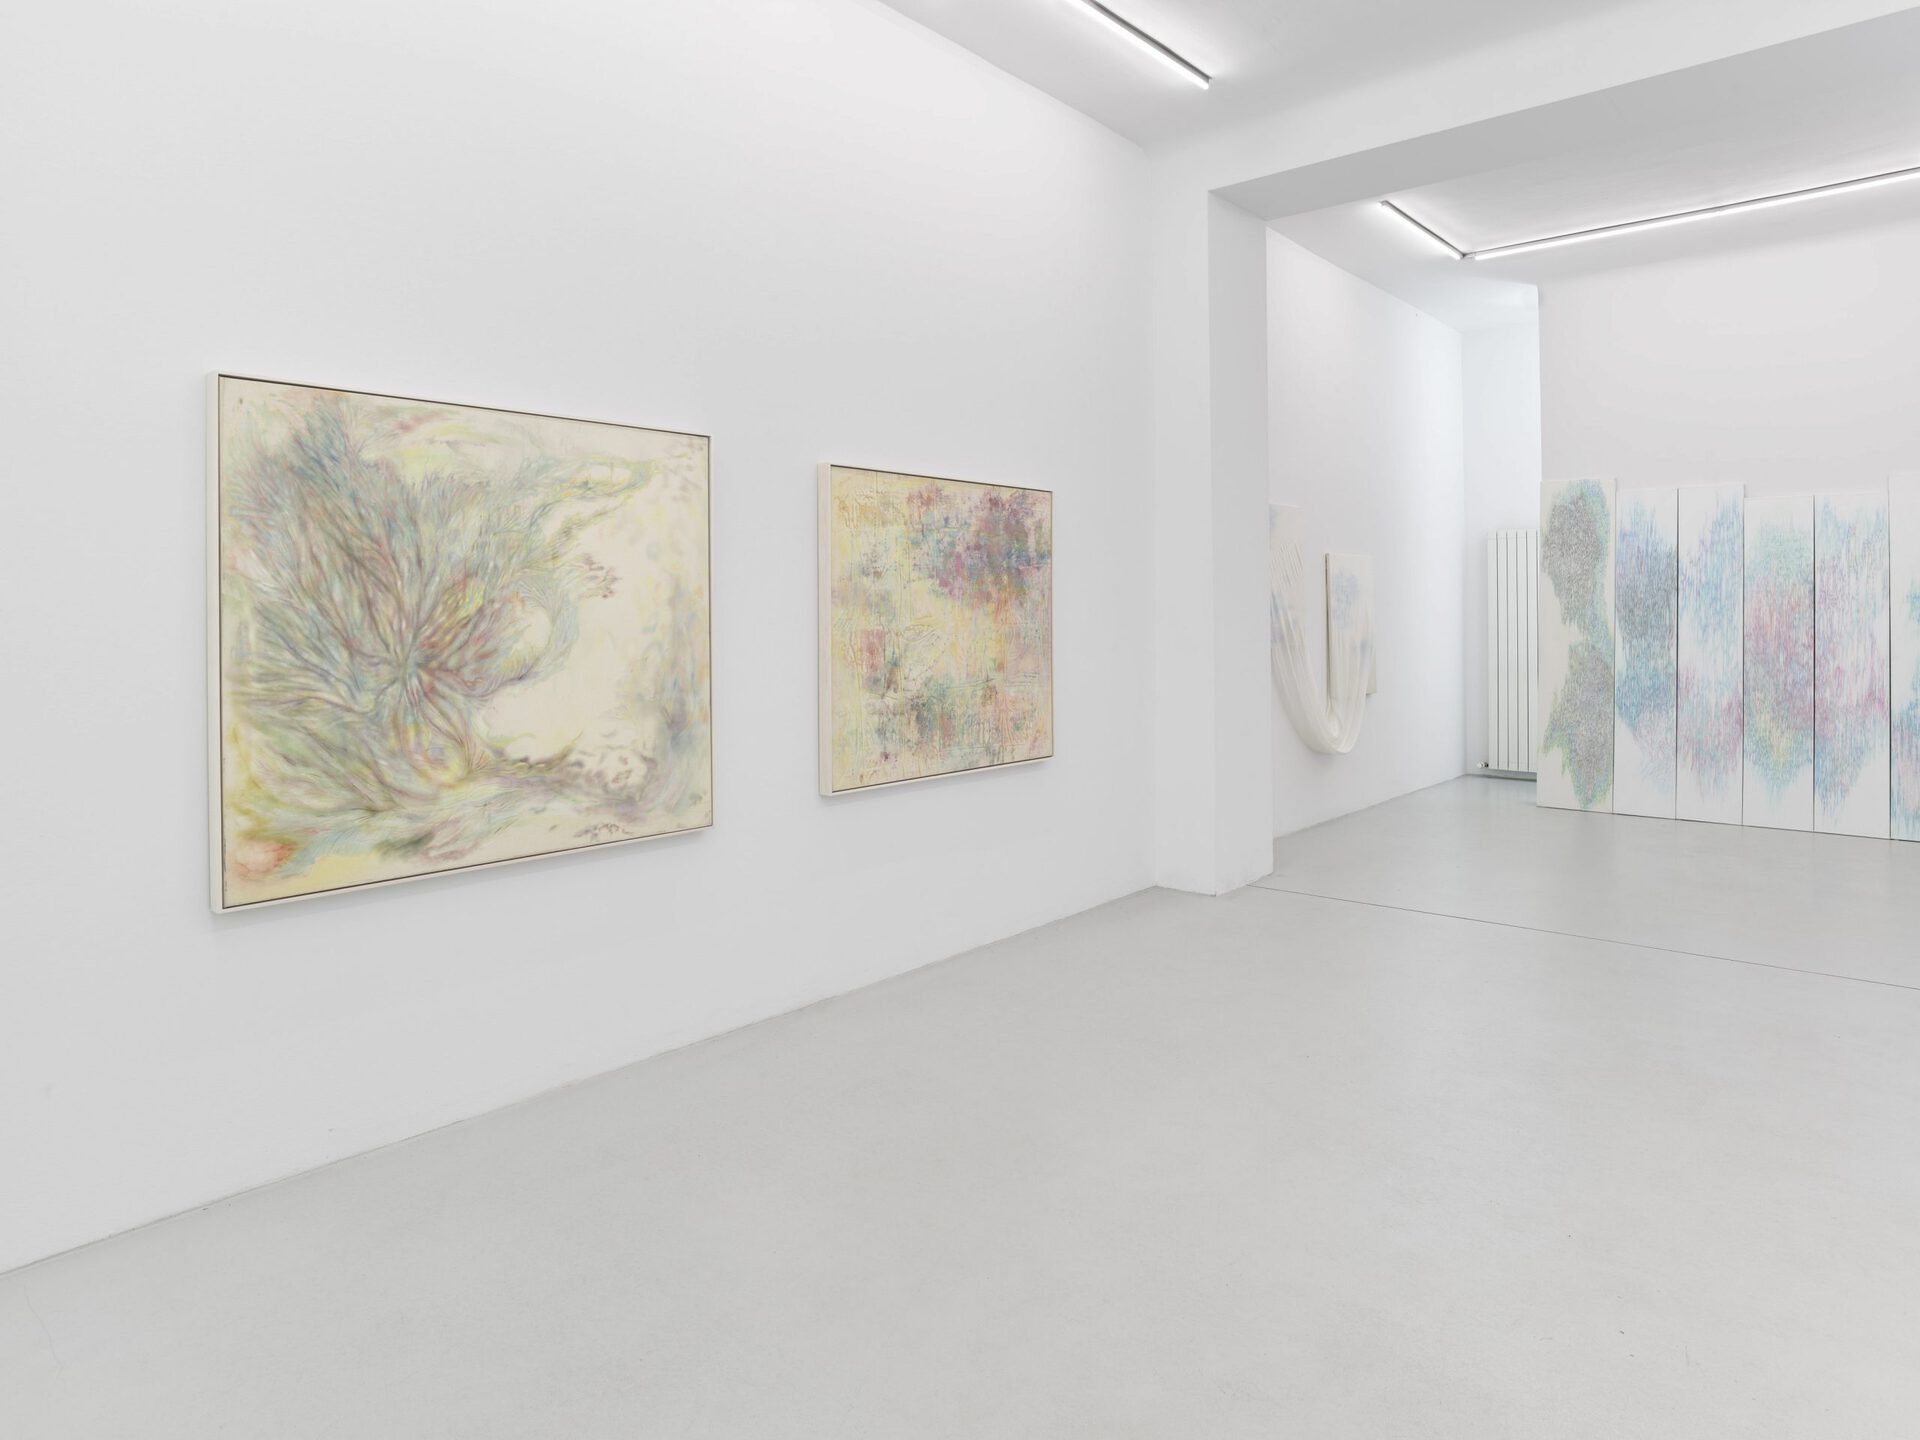 Aya Onodera, "Spurenelemente", Exhibition View 2, RL16, 2022, Berlin, Photo: Eric Tschernow